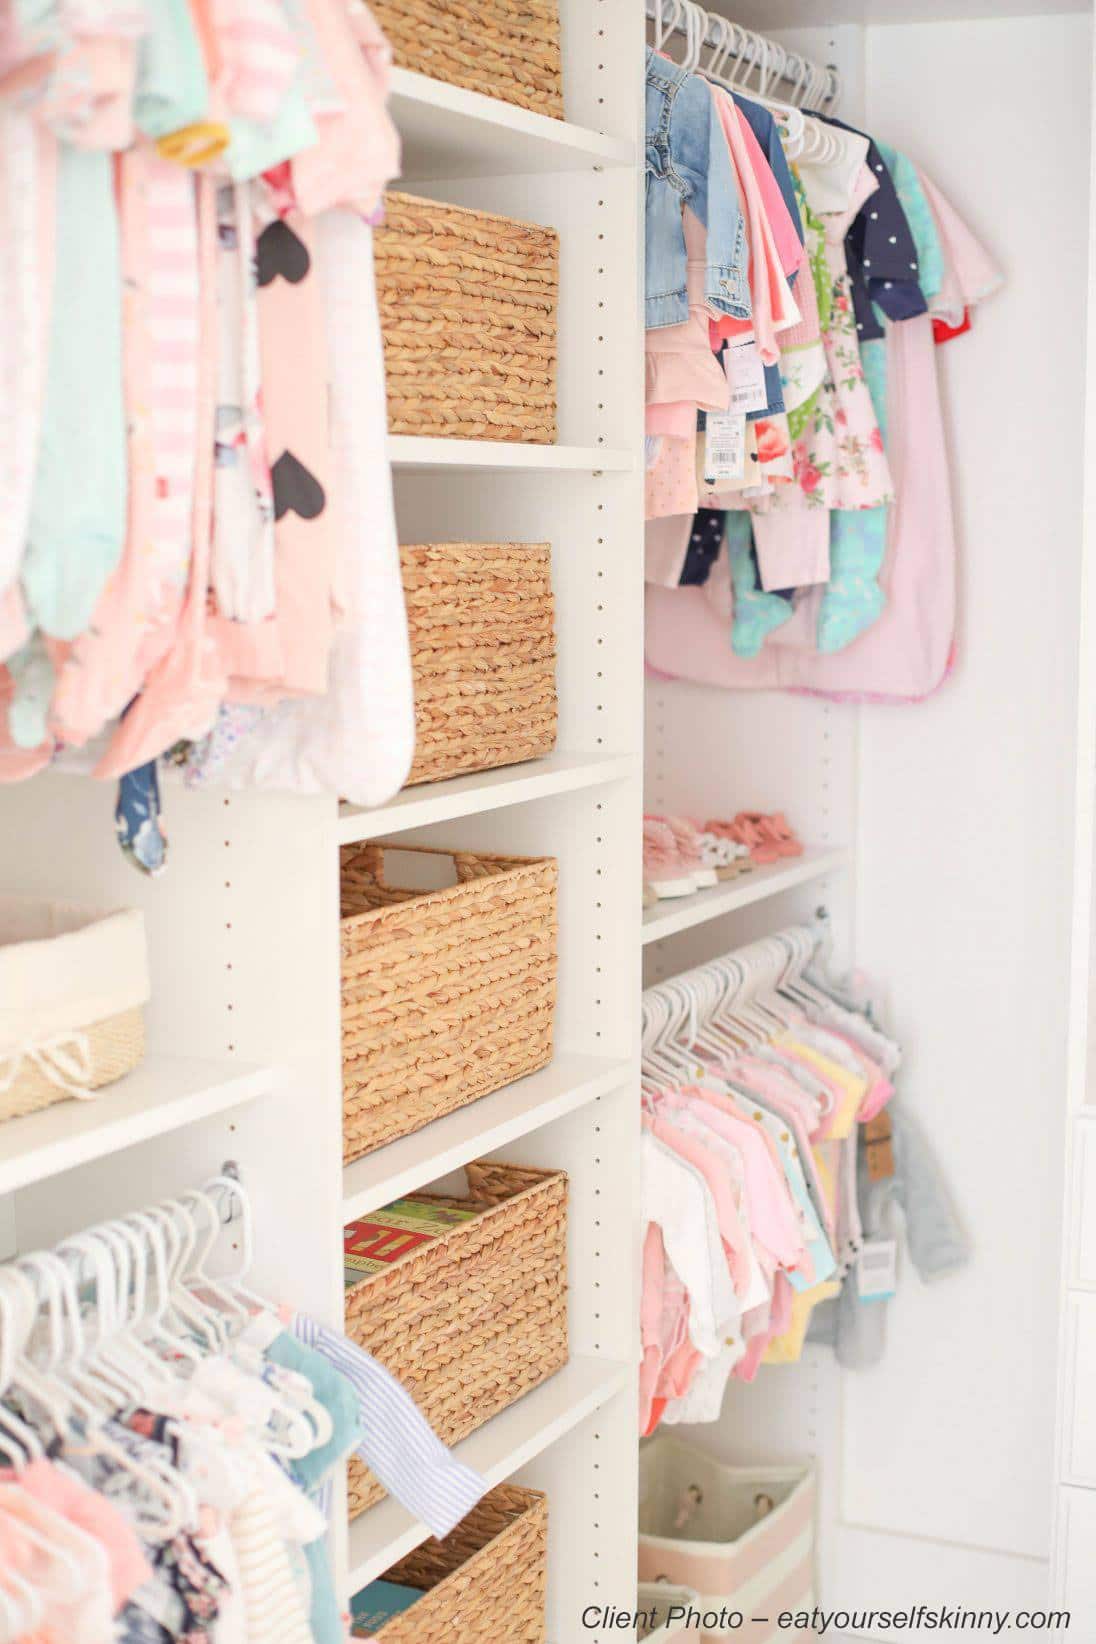 babycloset 5 ways to organize your child's room + make it fabulous